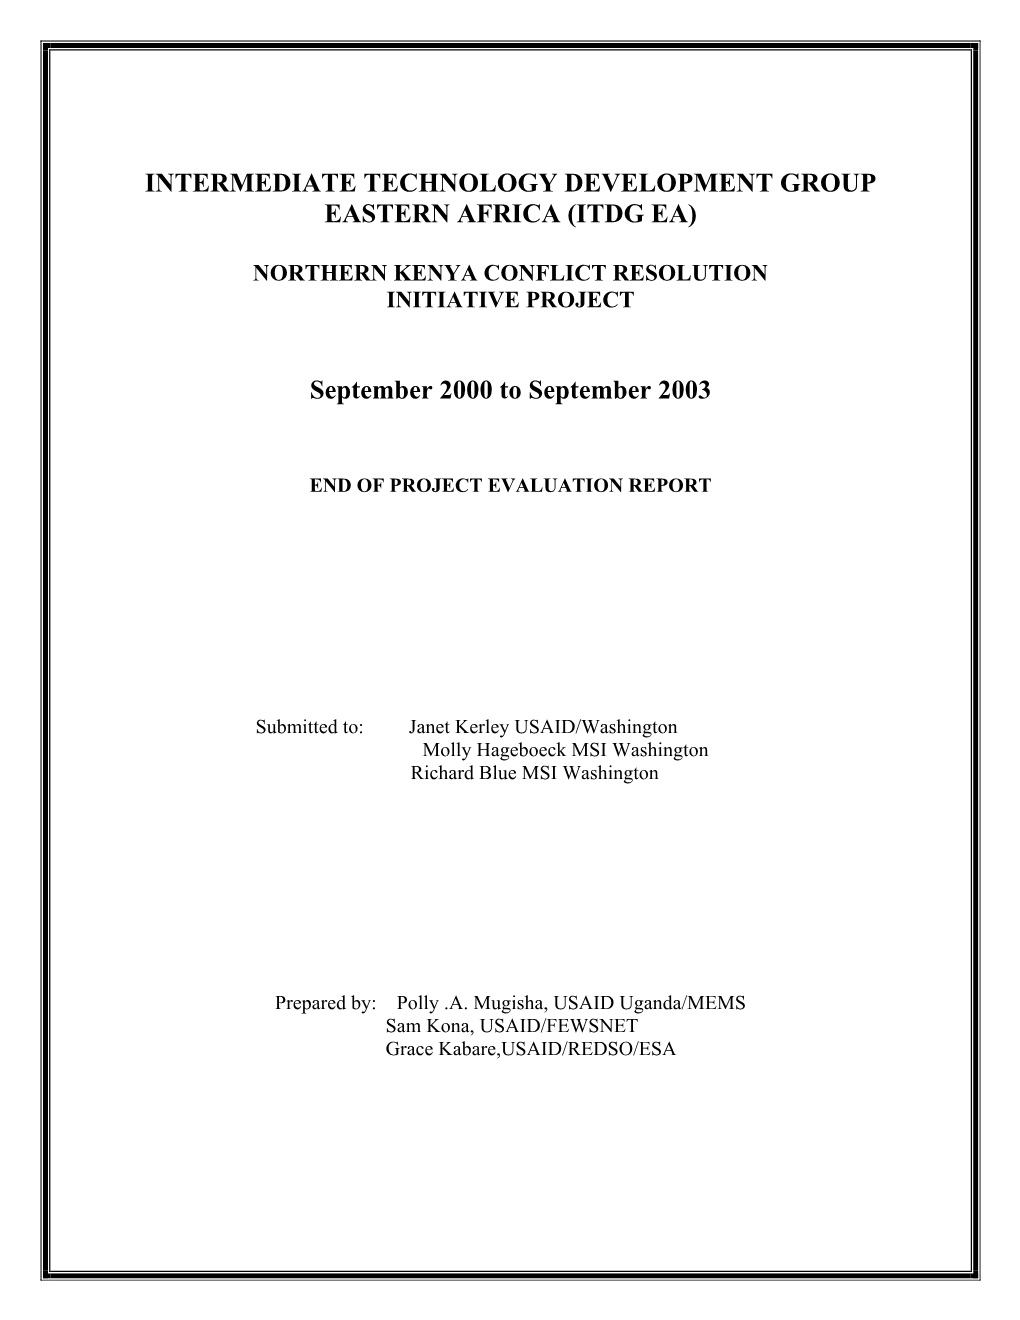 Intermediate Technology Development Group Eastern Africa (Itdg Ea)